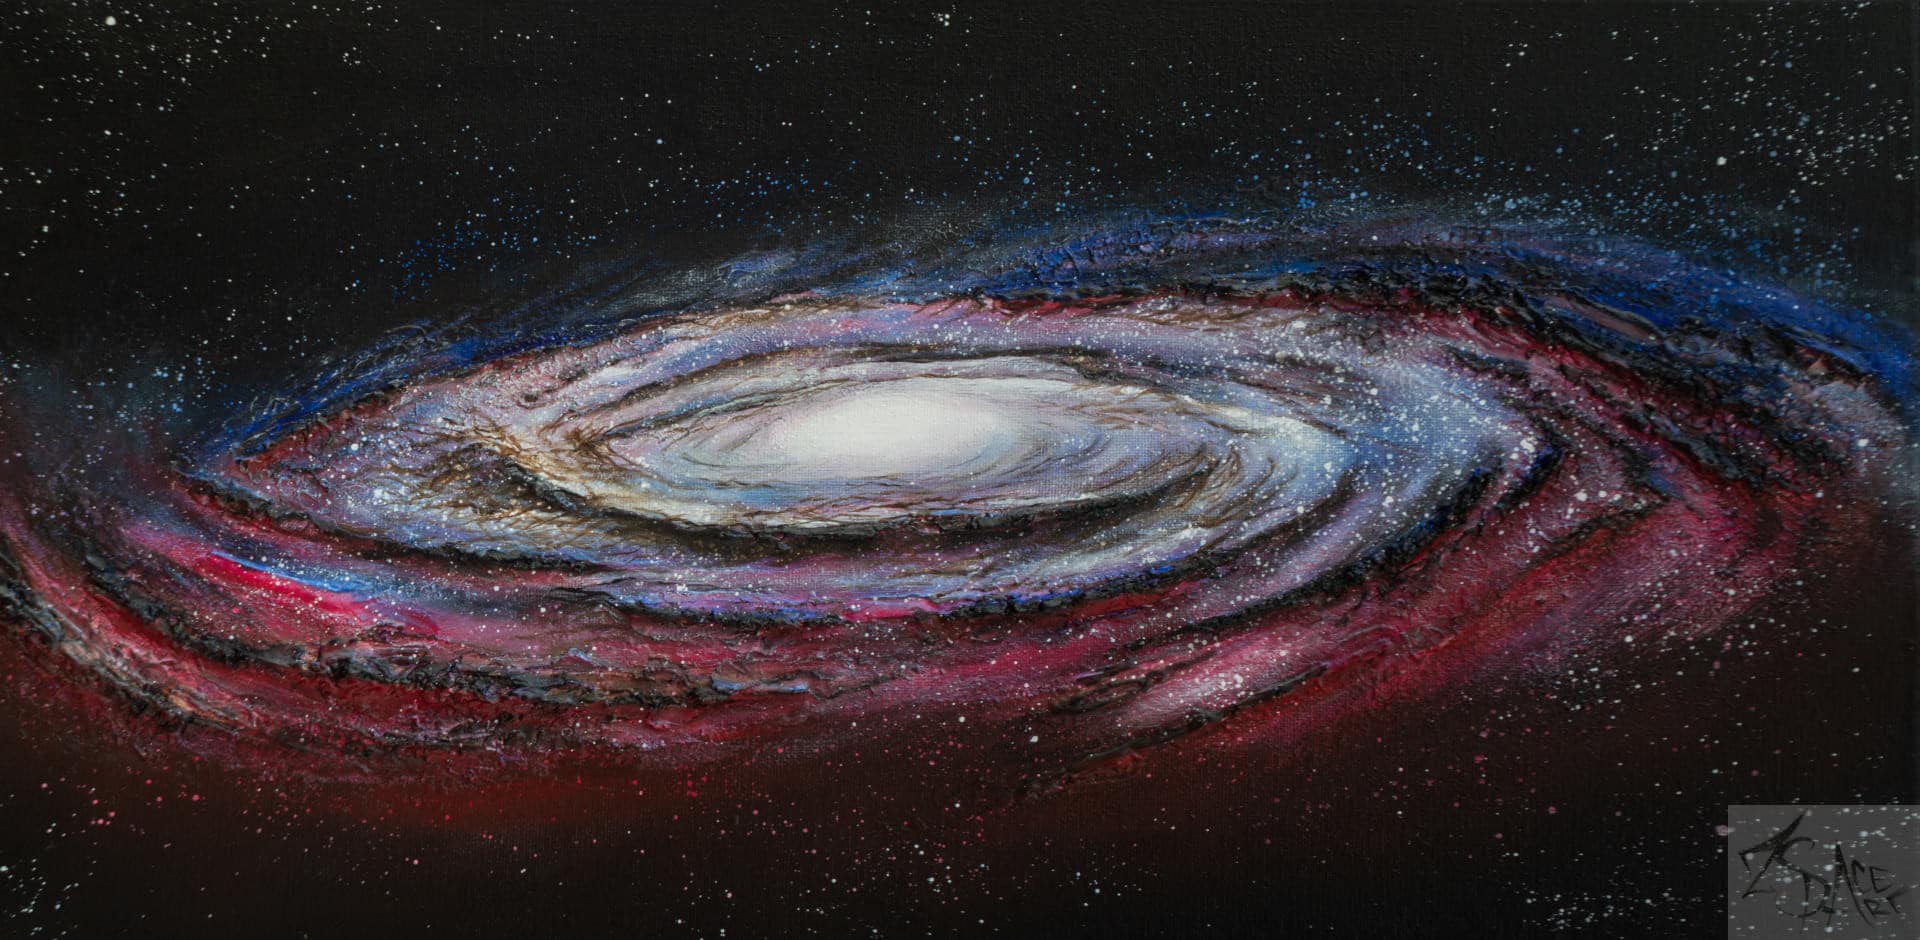 Imaginary spiral galaxy